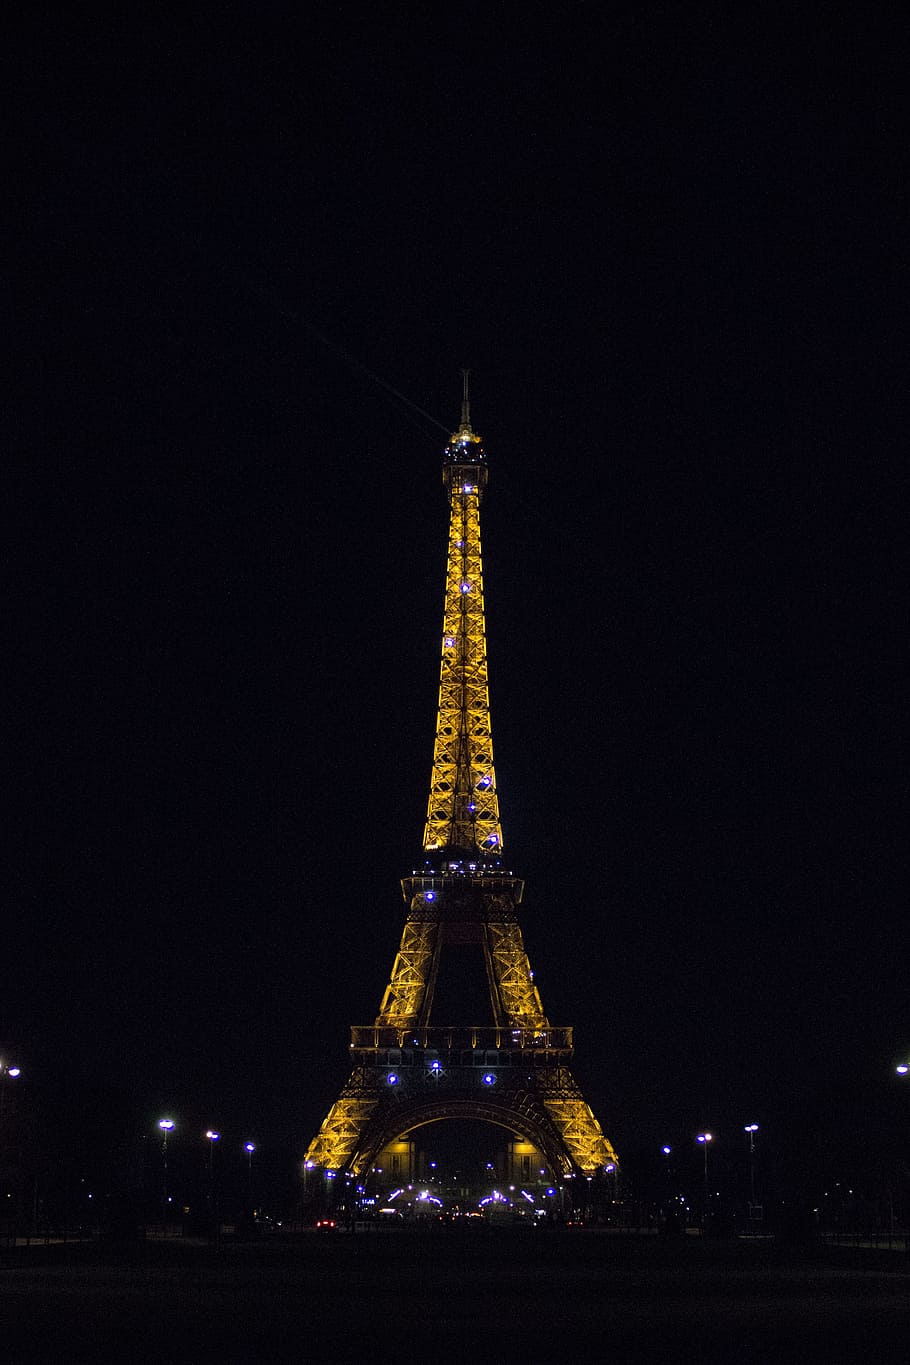 Eiffel Tower during nighttime, Eiffel Tower, Paris at nightime